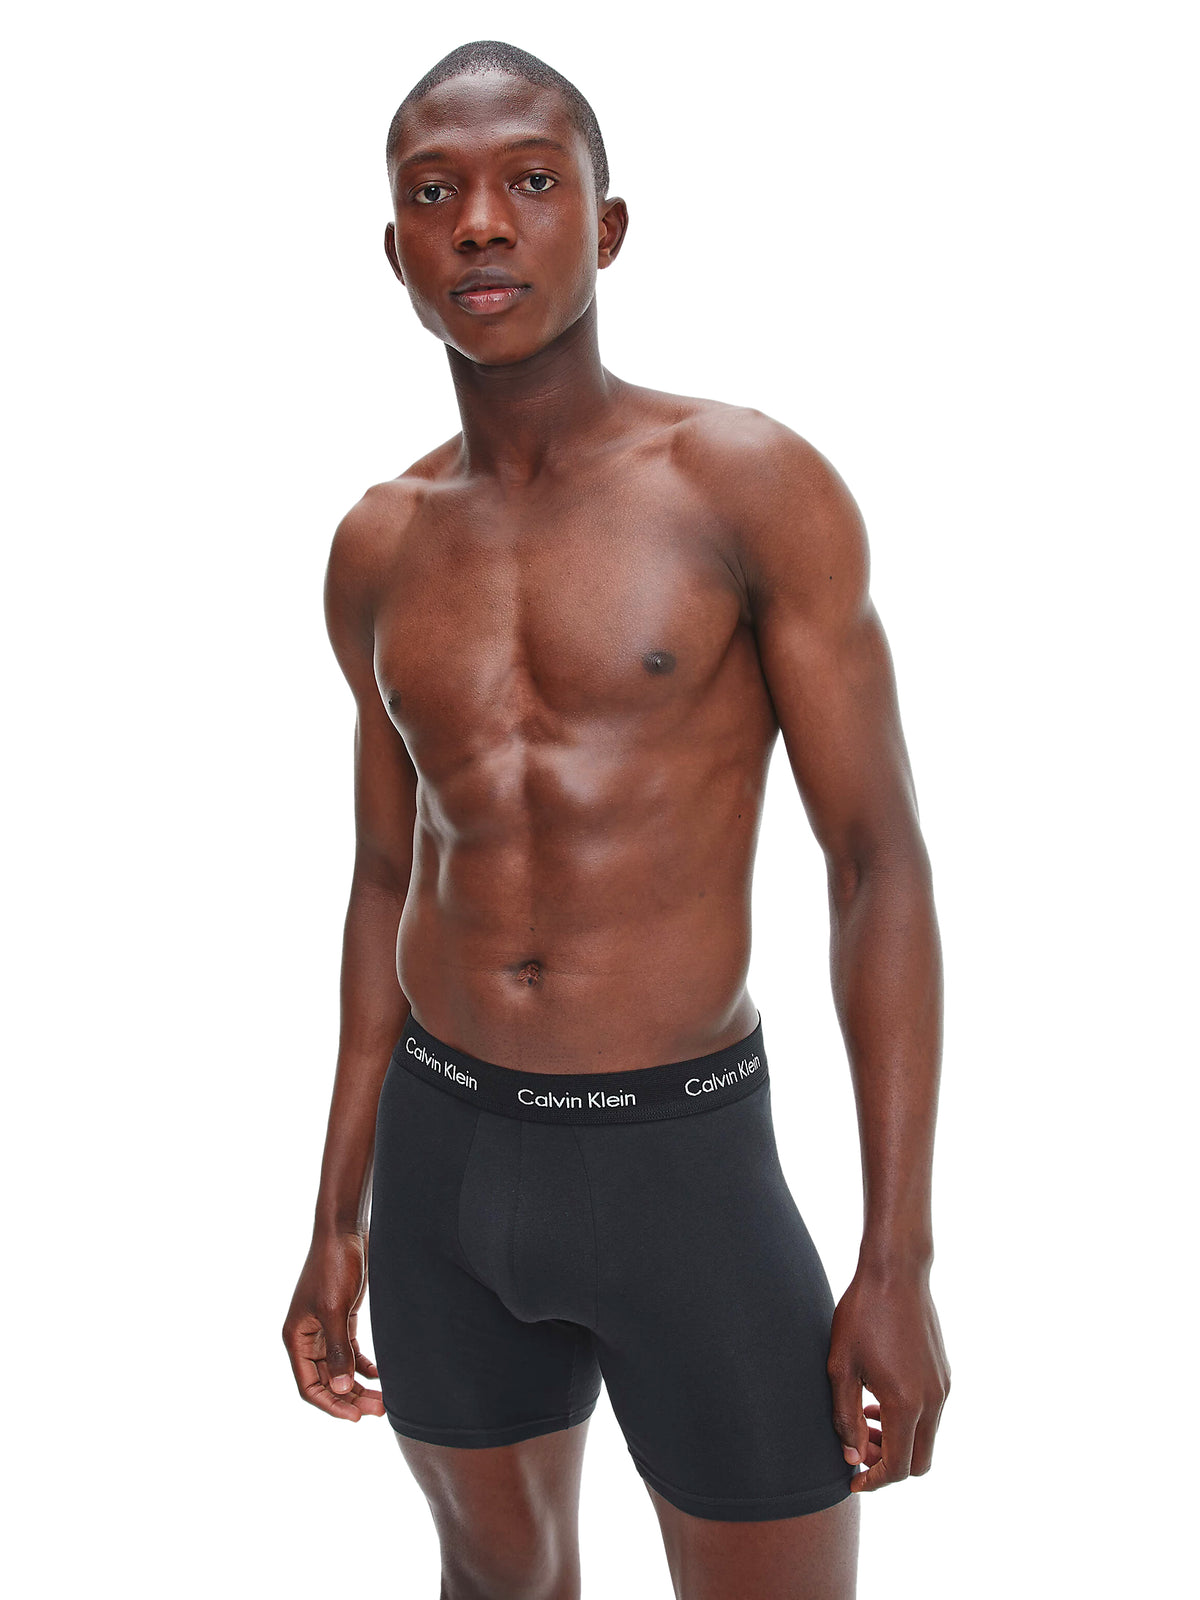 Calvin Klein Mens Boxer Briefs - Classic Fit (3-Pack), 02, Nb1770A, Black/Black/Black